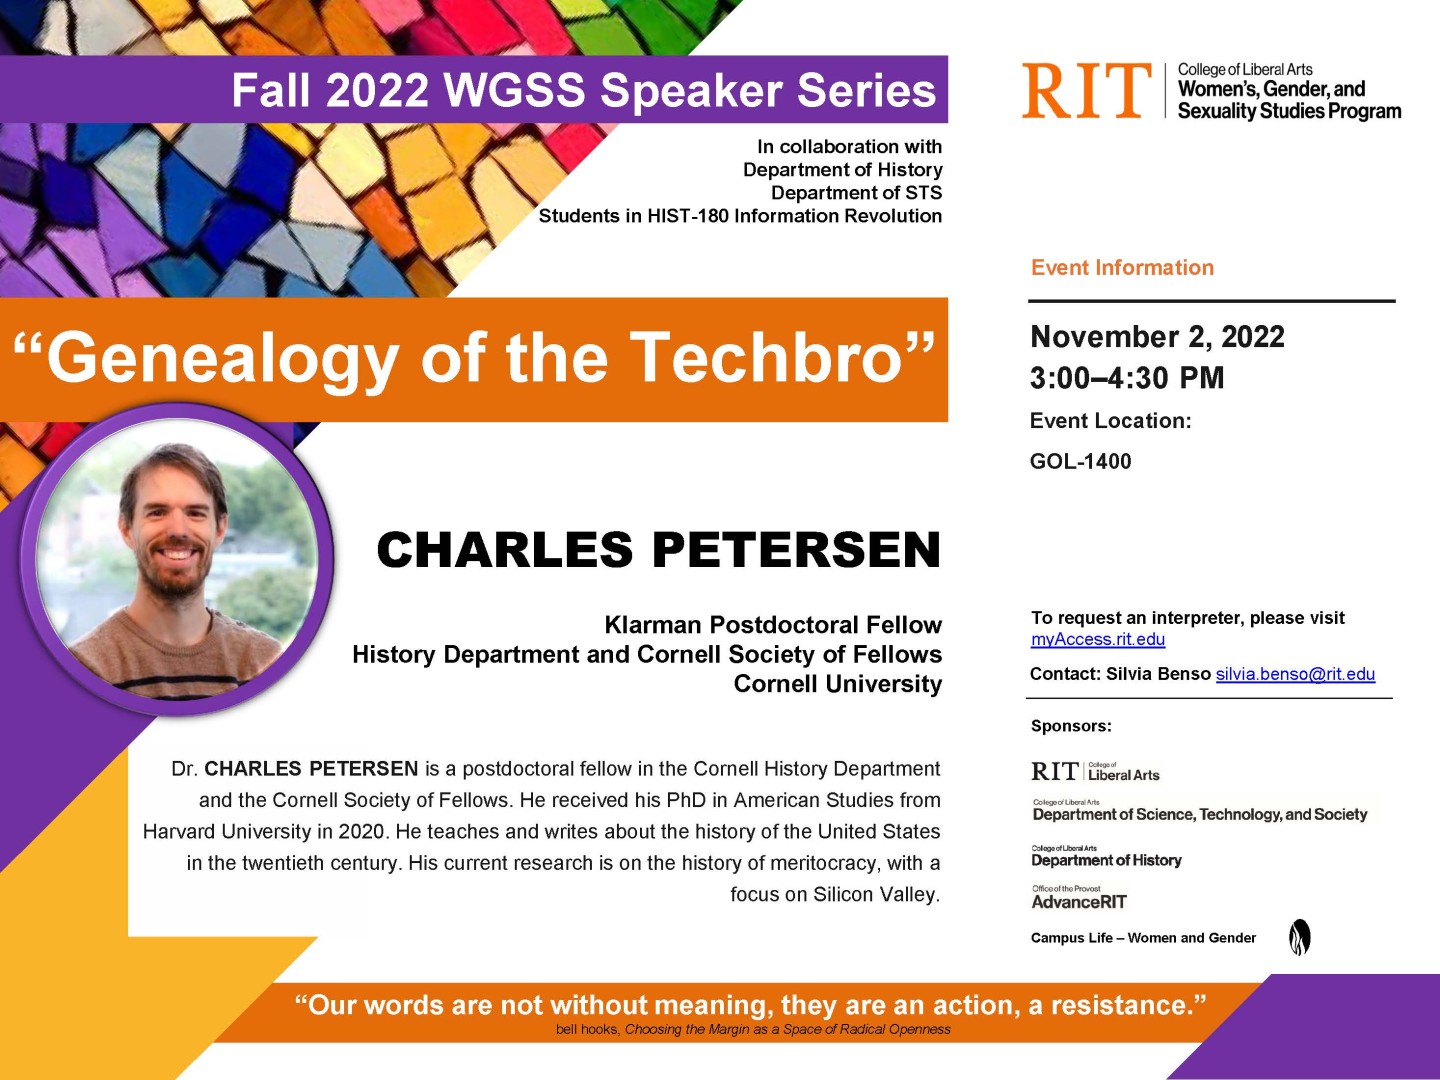 WGSS Speaker Series, Charles Petersen, "Genealogy of the Techbro"